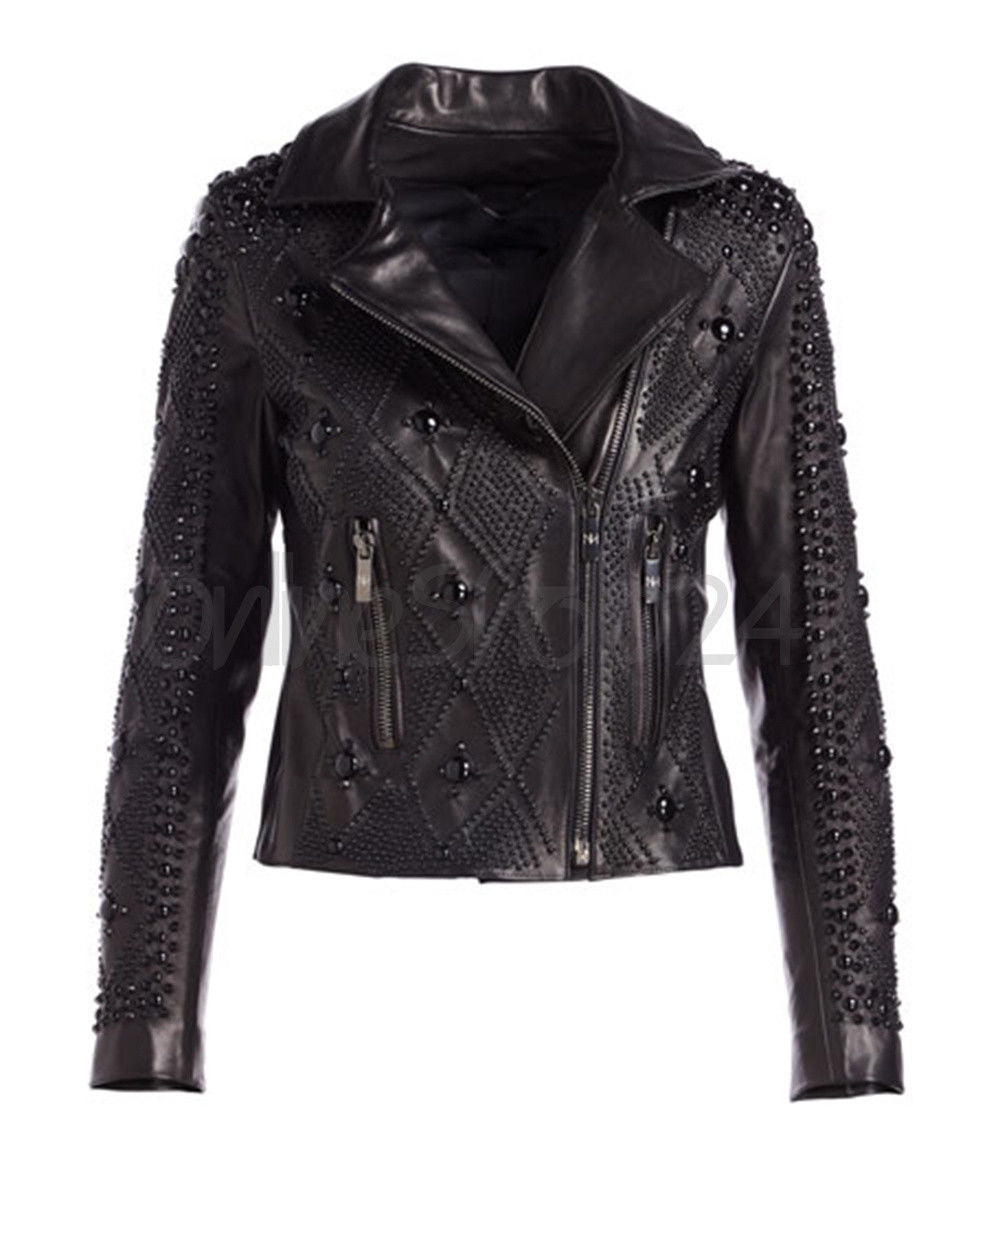 Nour Hammour Woman Leather Jacket Black Tonal Full Studded Designed - Luxurena Leather